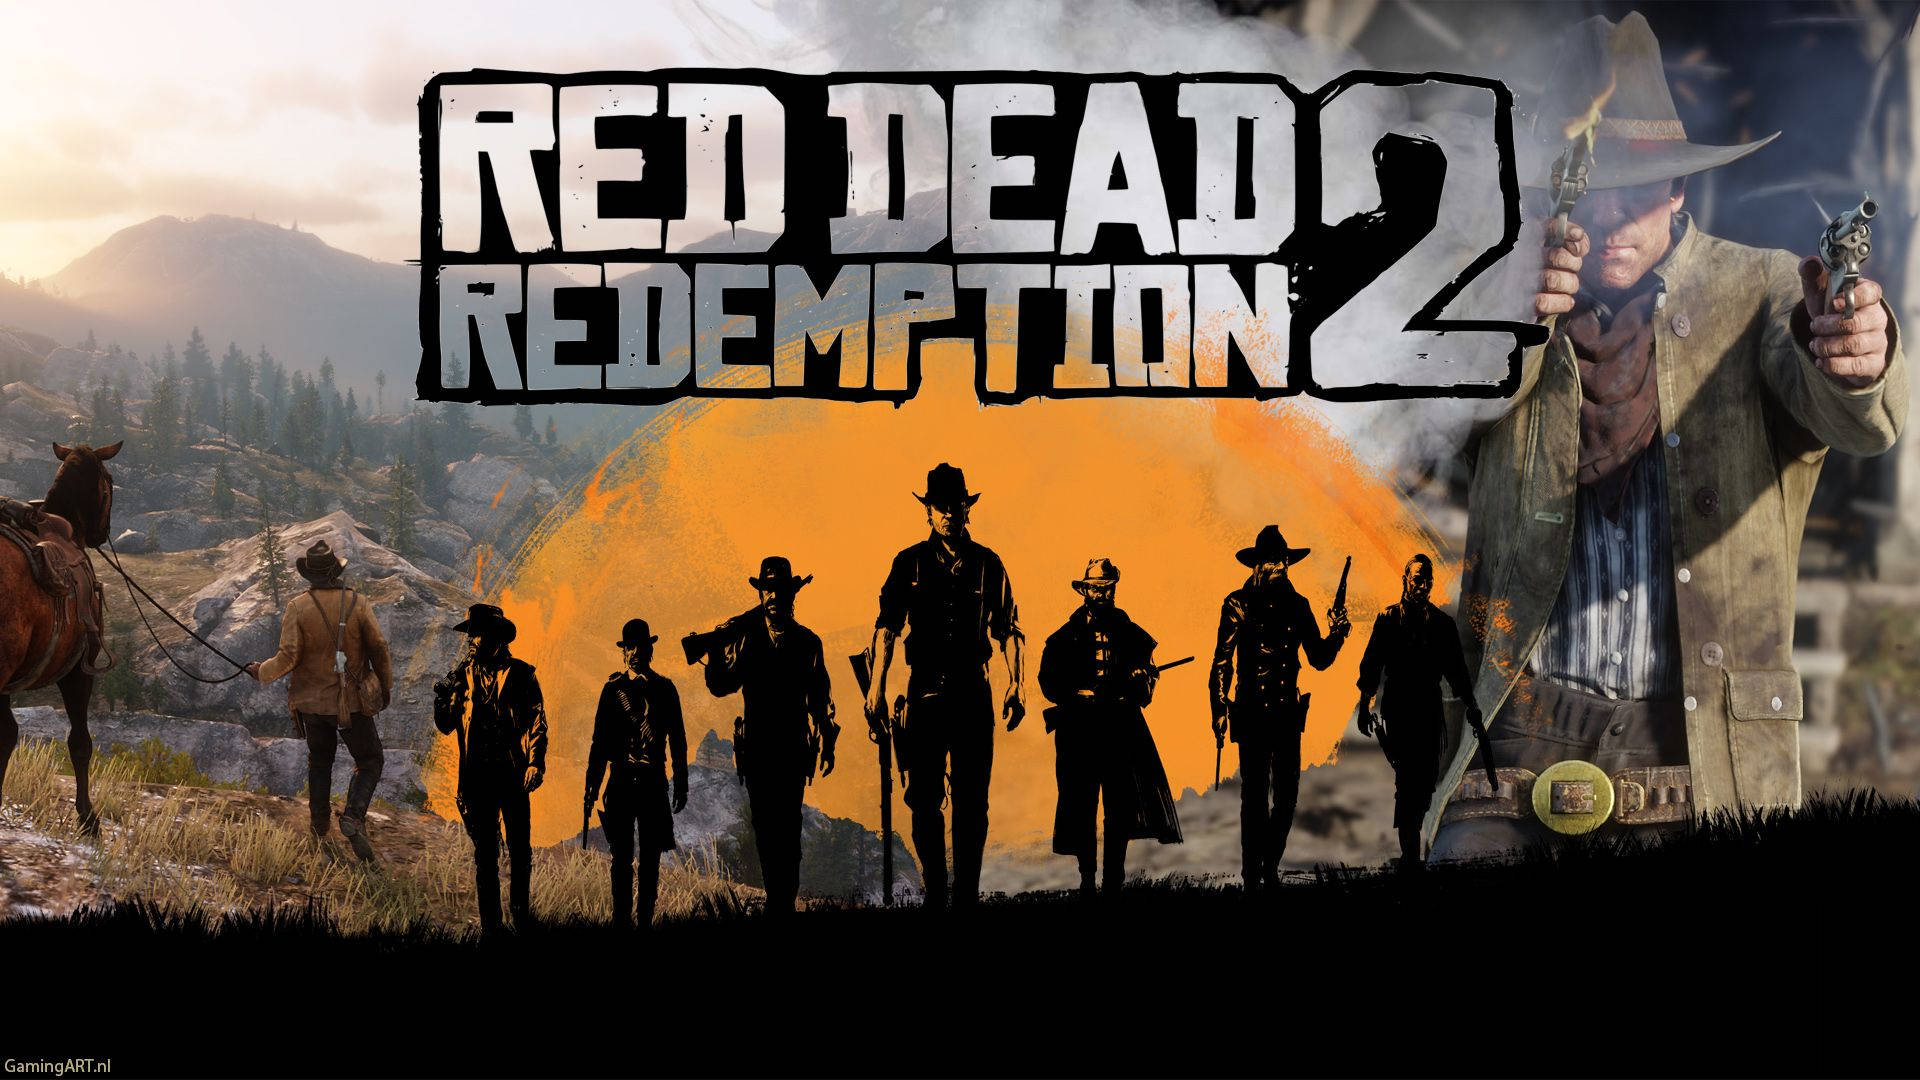 Free Red Dead Redemption 2 Wallpaper Downloads, [200+] Red Dead Redemption  2 Wallpapers for FREE 